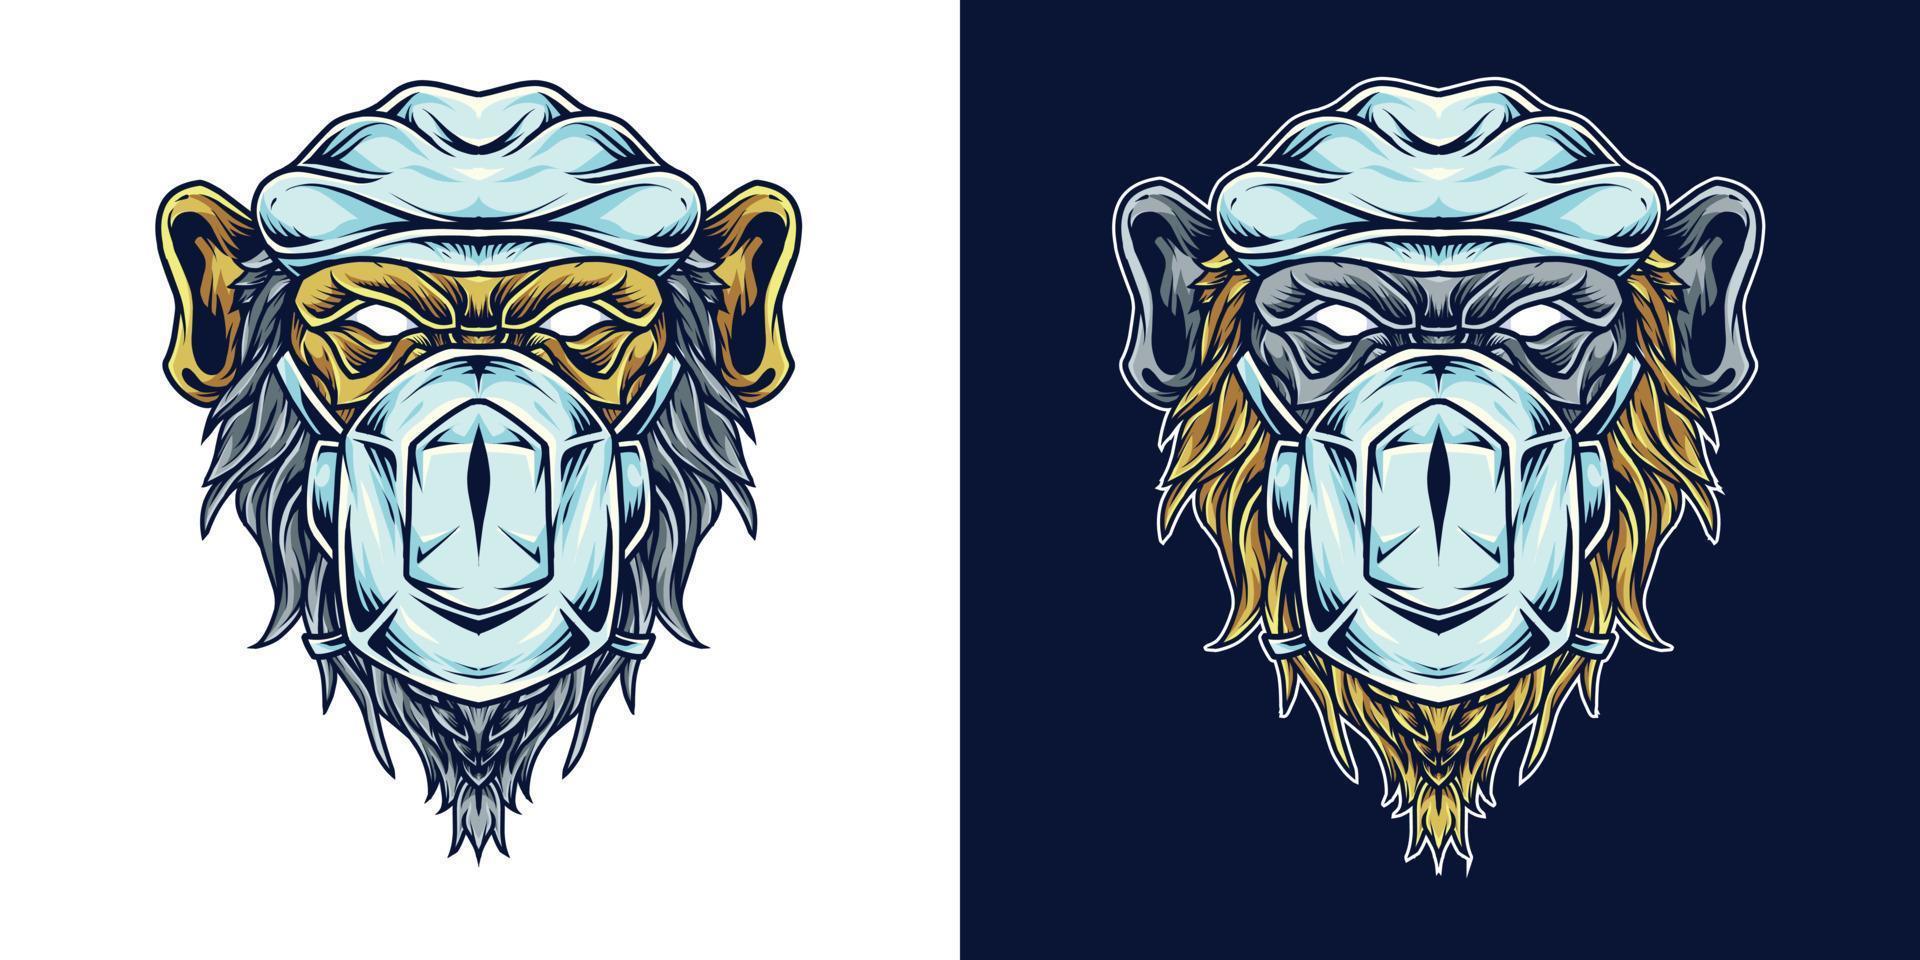 Chimp Medic Head Mascot Logo Illustration vector